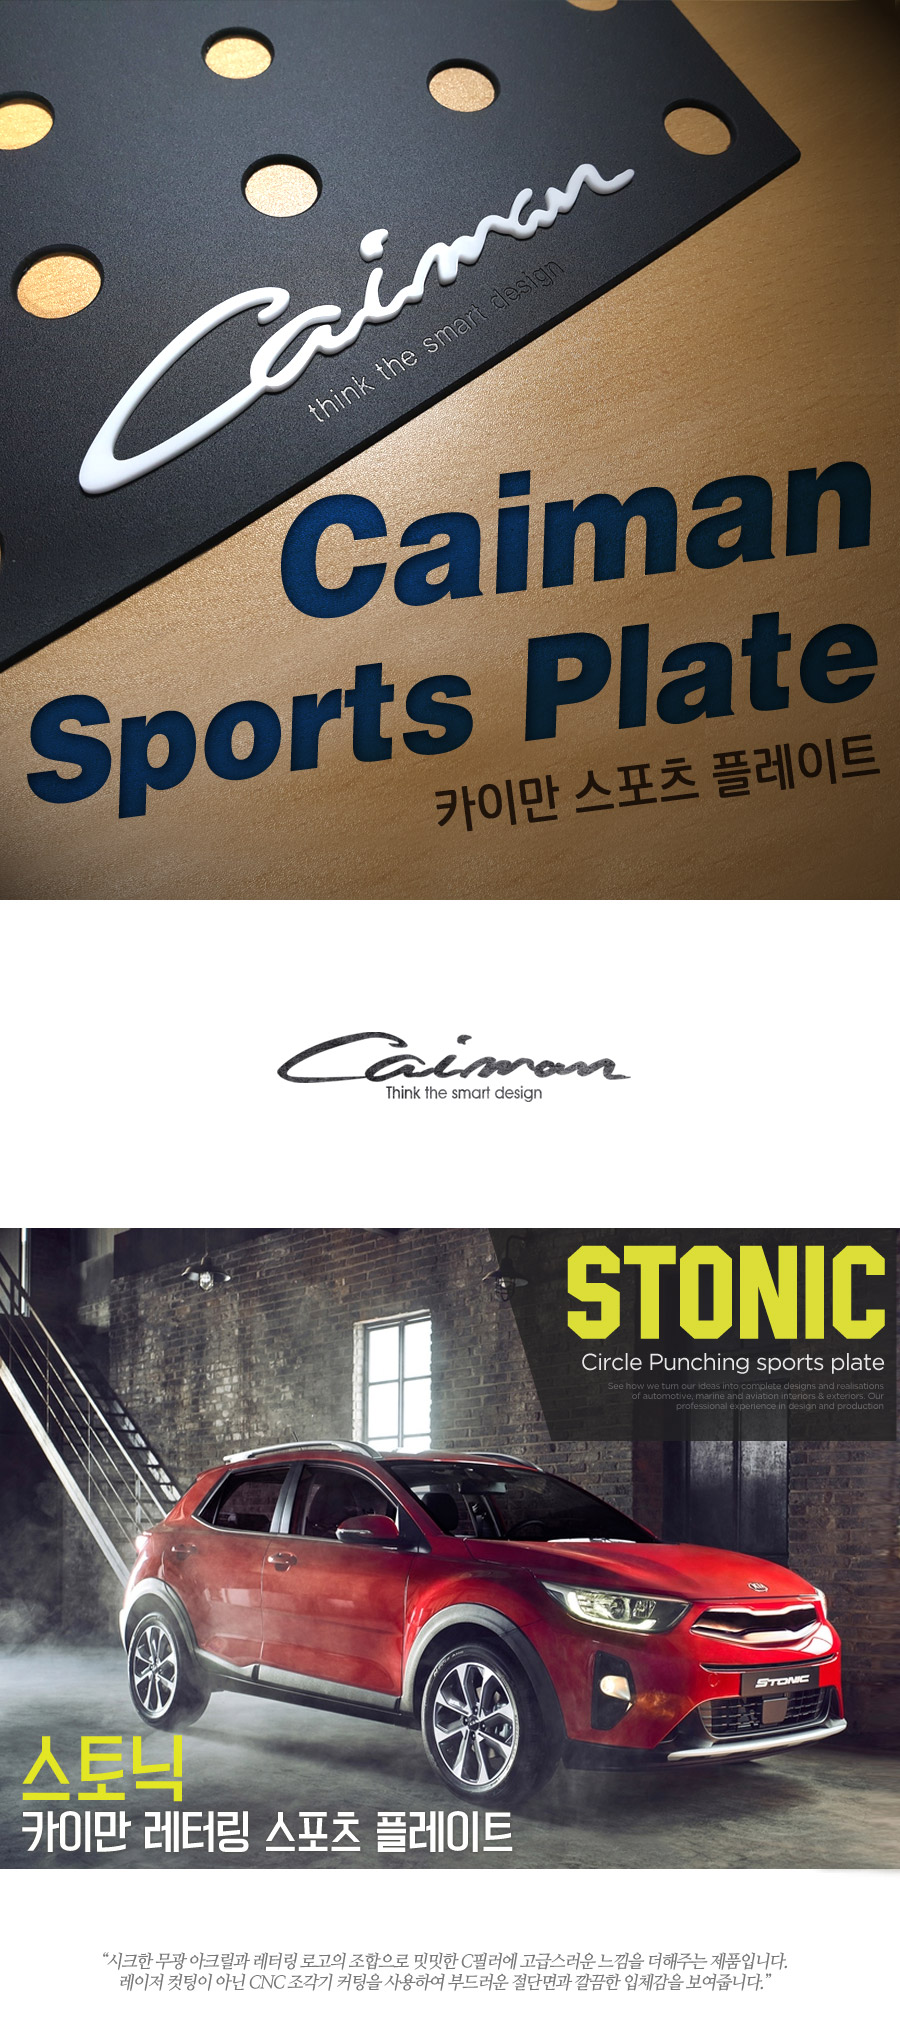 stonic-caiman-sports-plate_01_135207.jpg